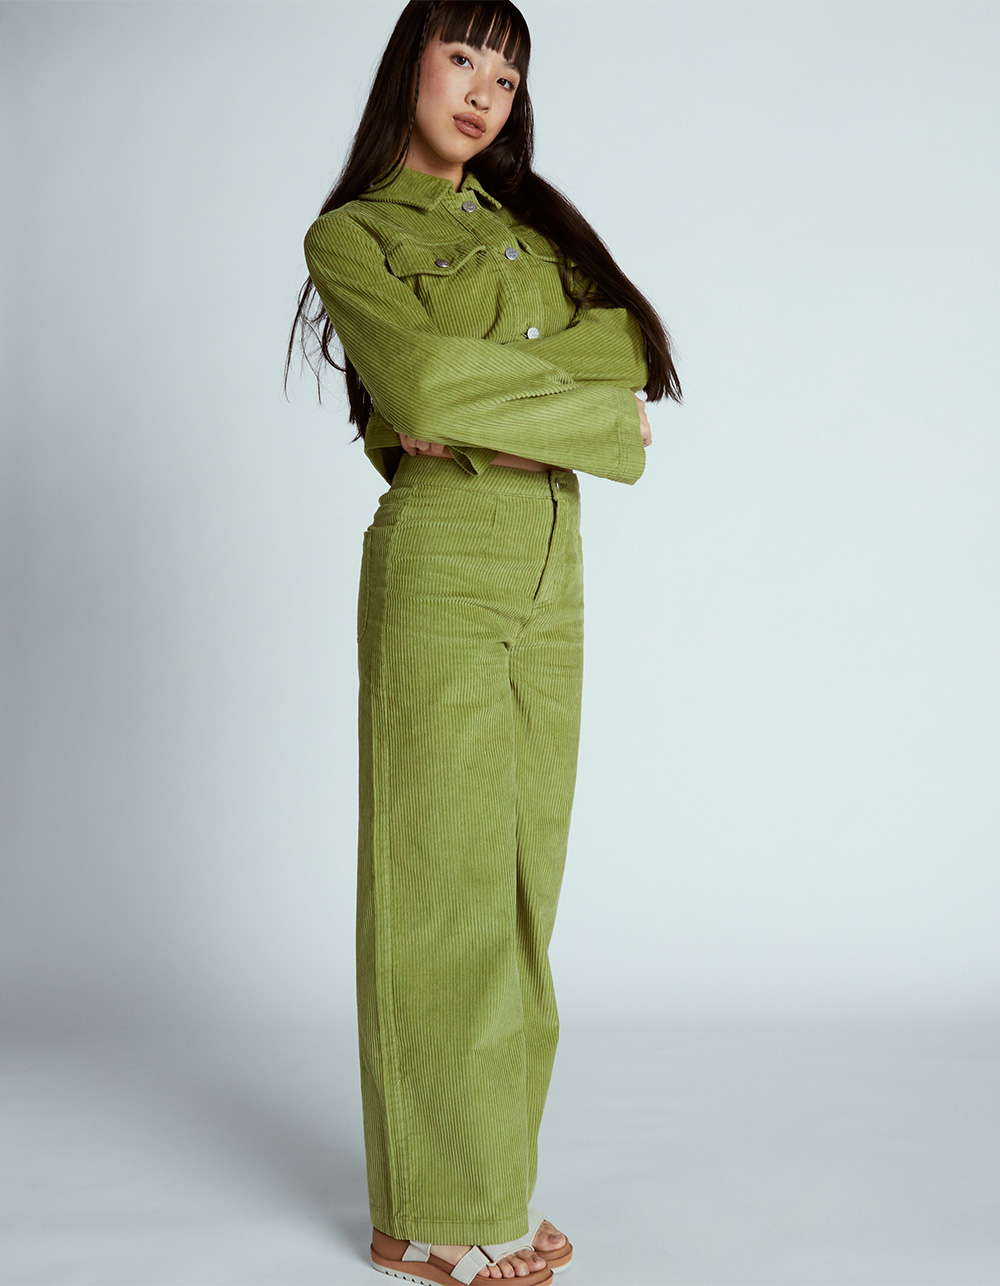 ROXY x Chloe Kim Womens Corduroy Pants - GREEN